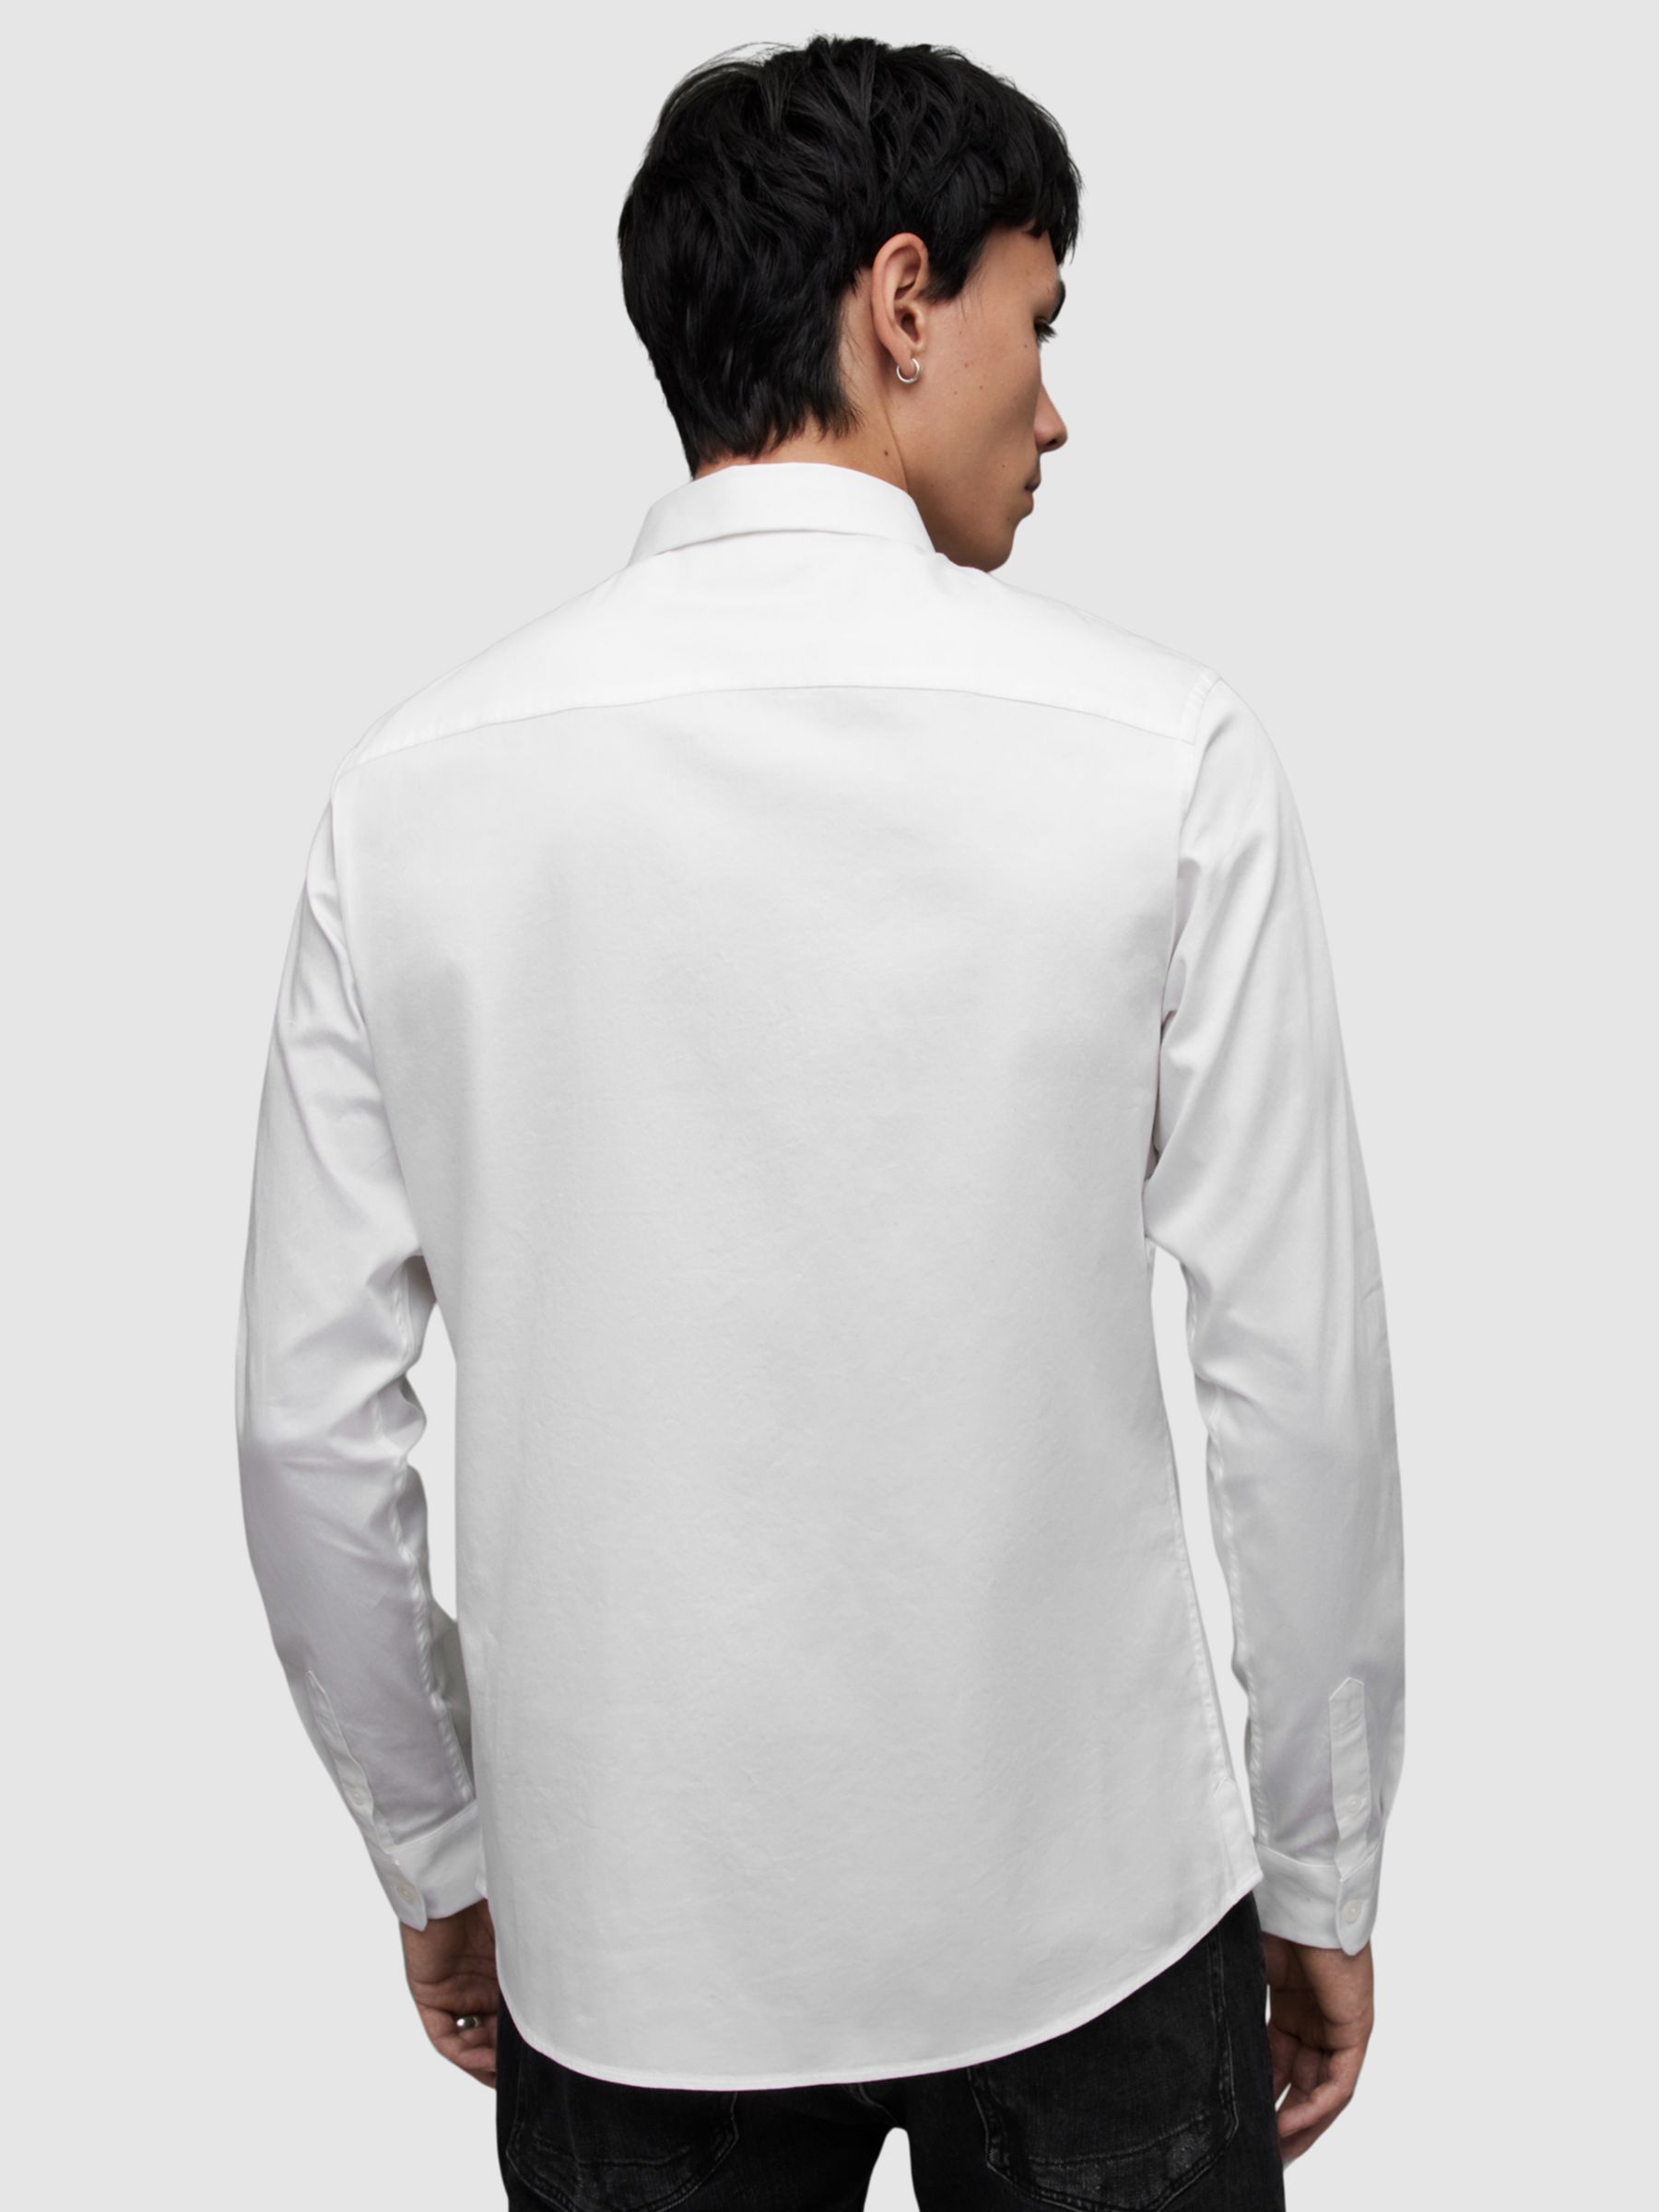 AllSaints Simmons Long Sleeve Shirt, Optic White, S